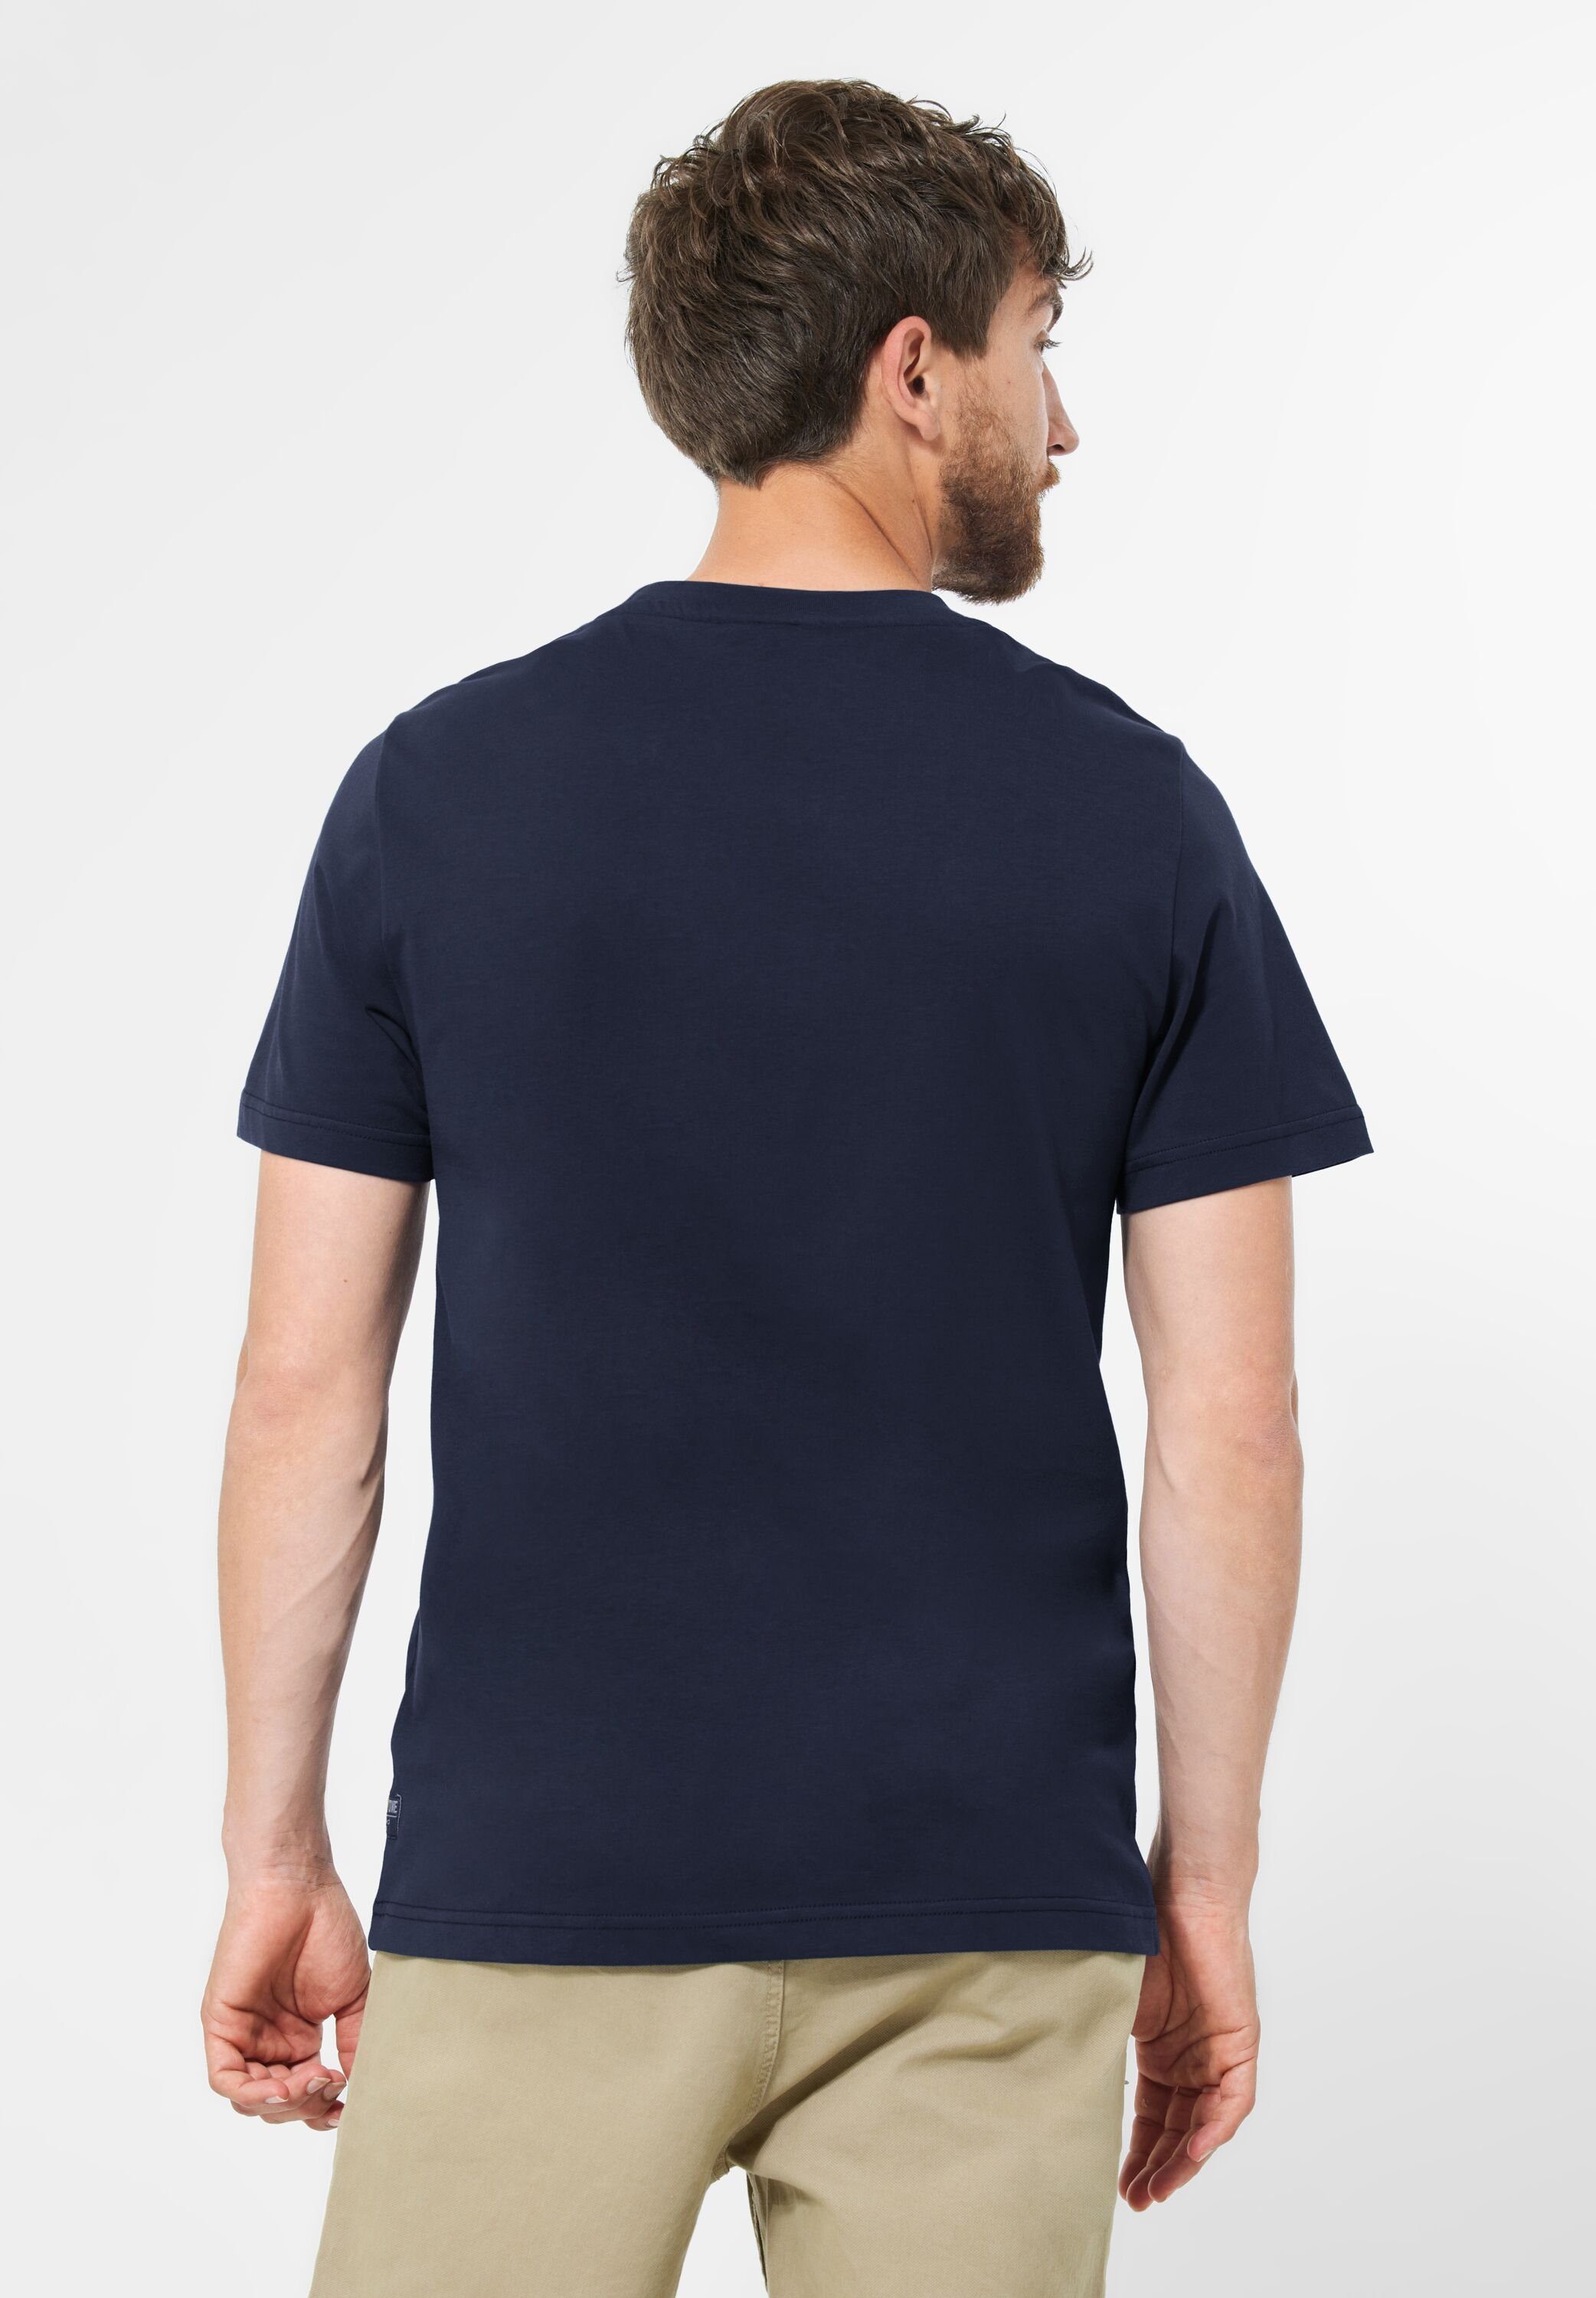 ONE deep Wording mit MEN blue navy STREET T-Shirt